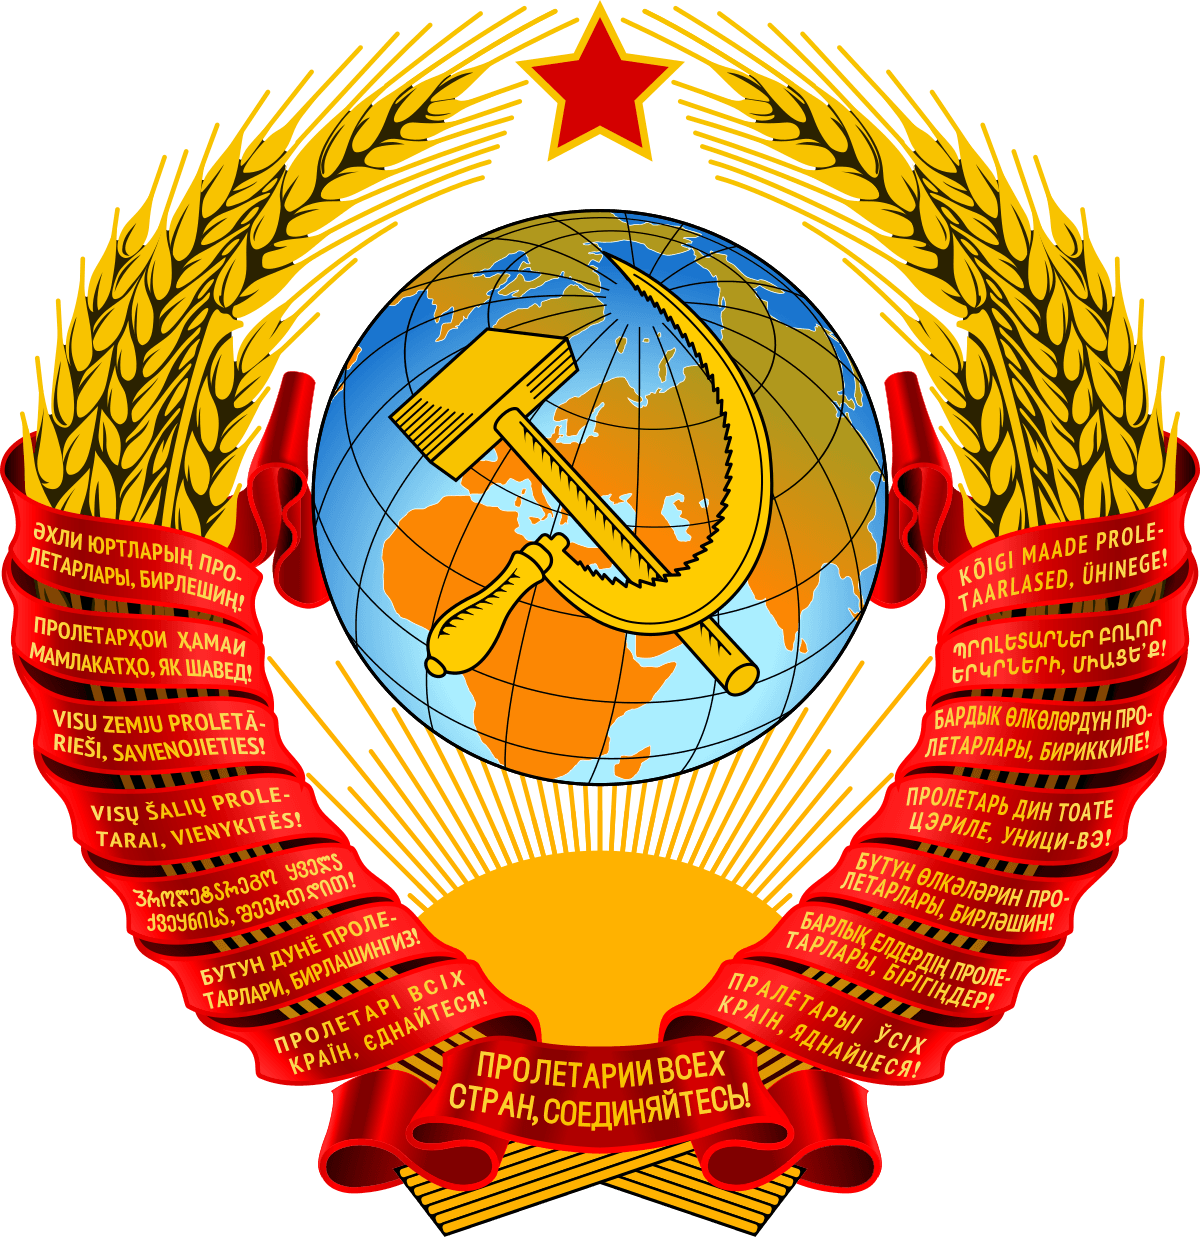 NKVD Logo - State Emblem of the Soviet Union